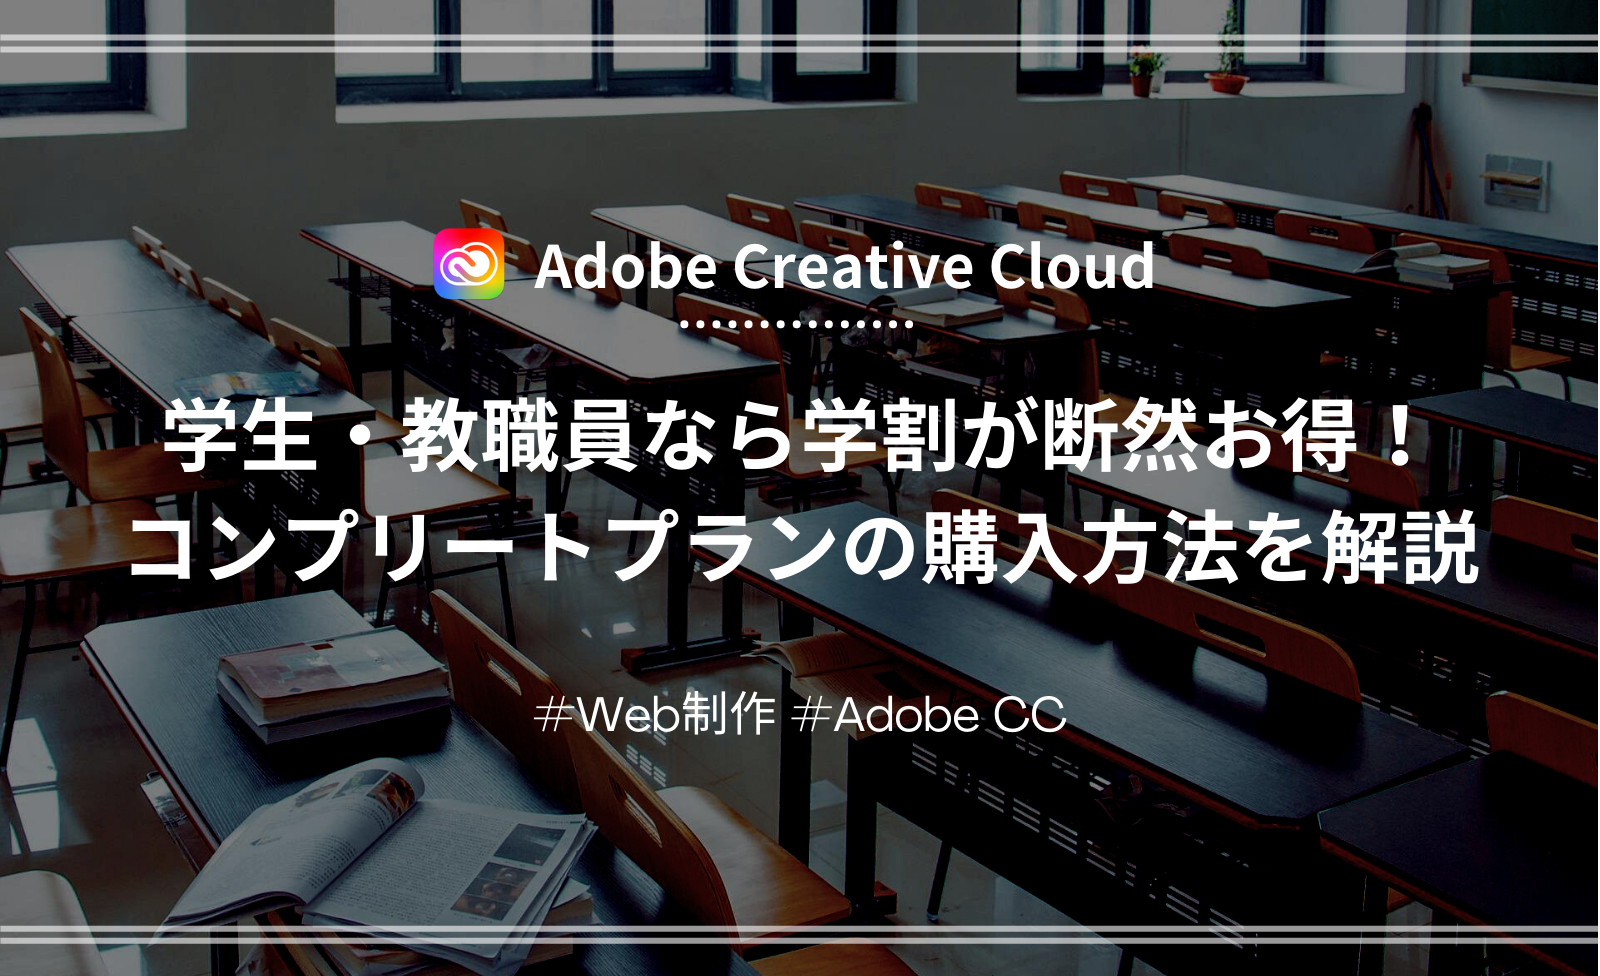 「【Adobe CC】学生・教職員ならコンプリートプランの学割一択。対象者や購入方法を詳しく解説」のアイキャッチ画像